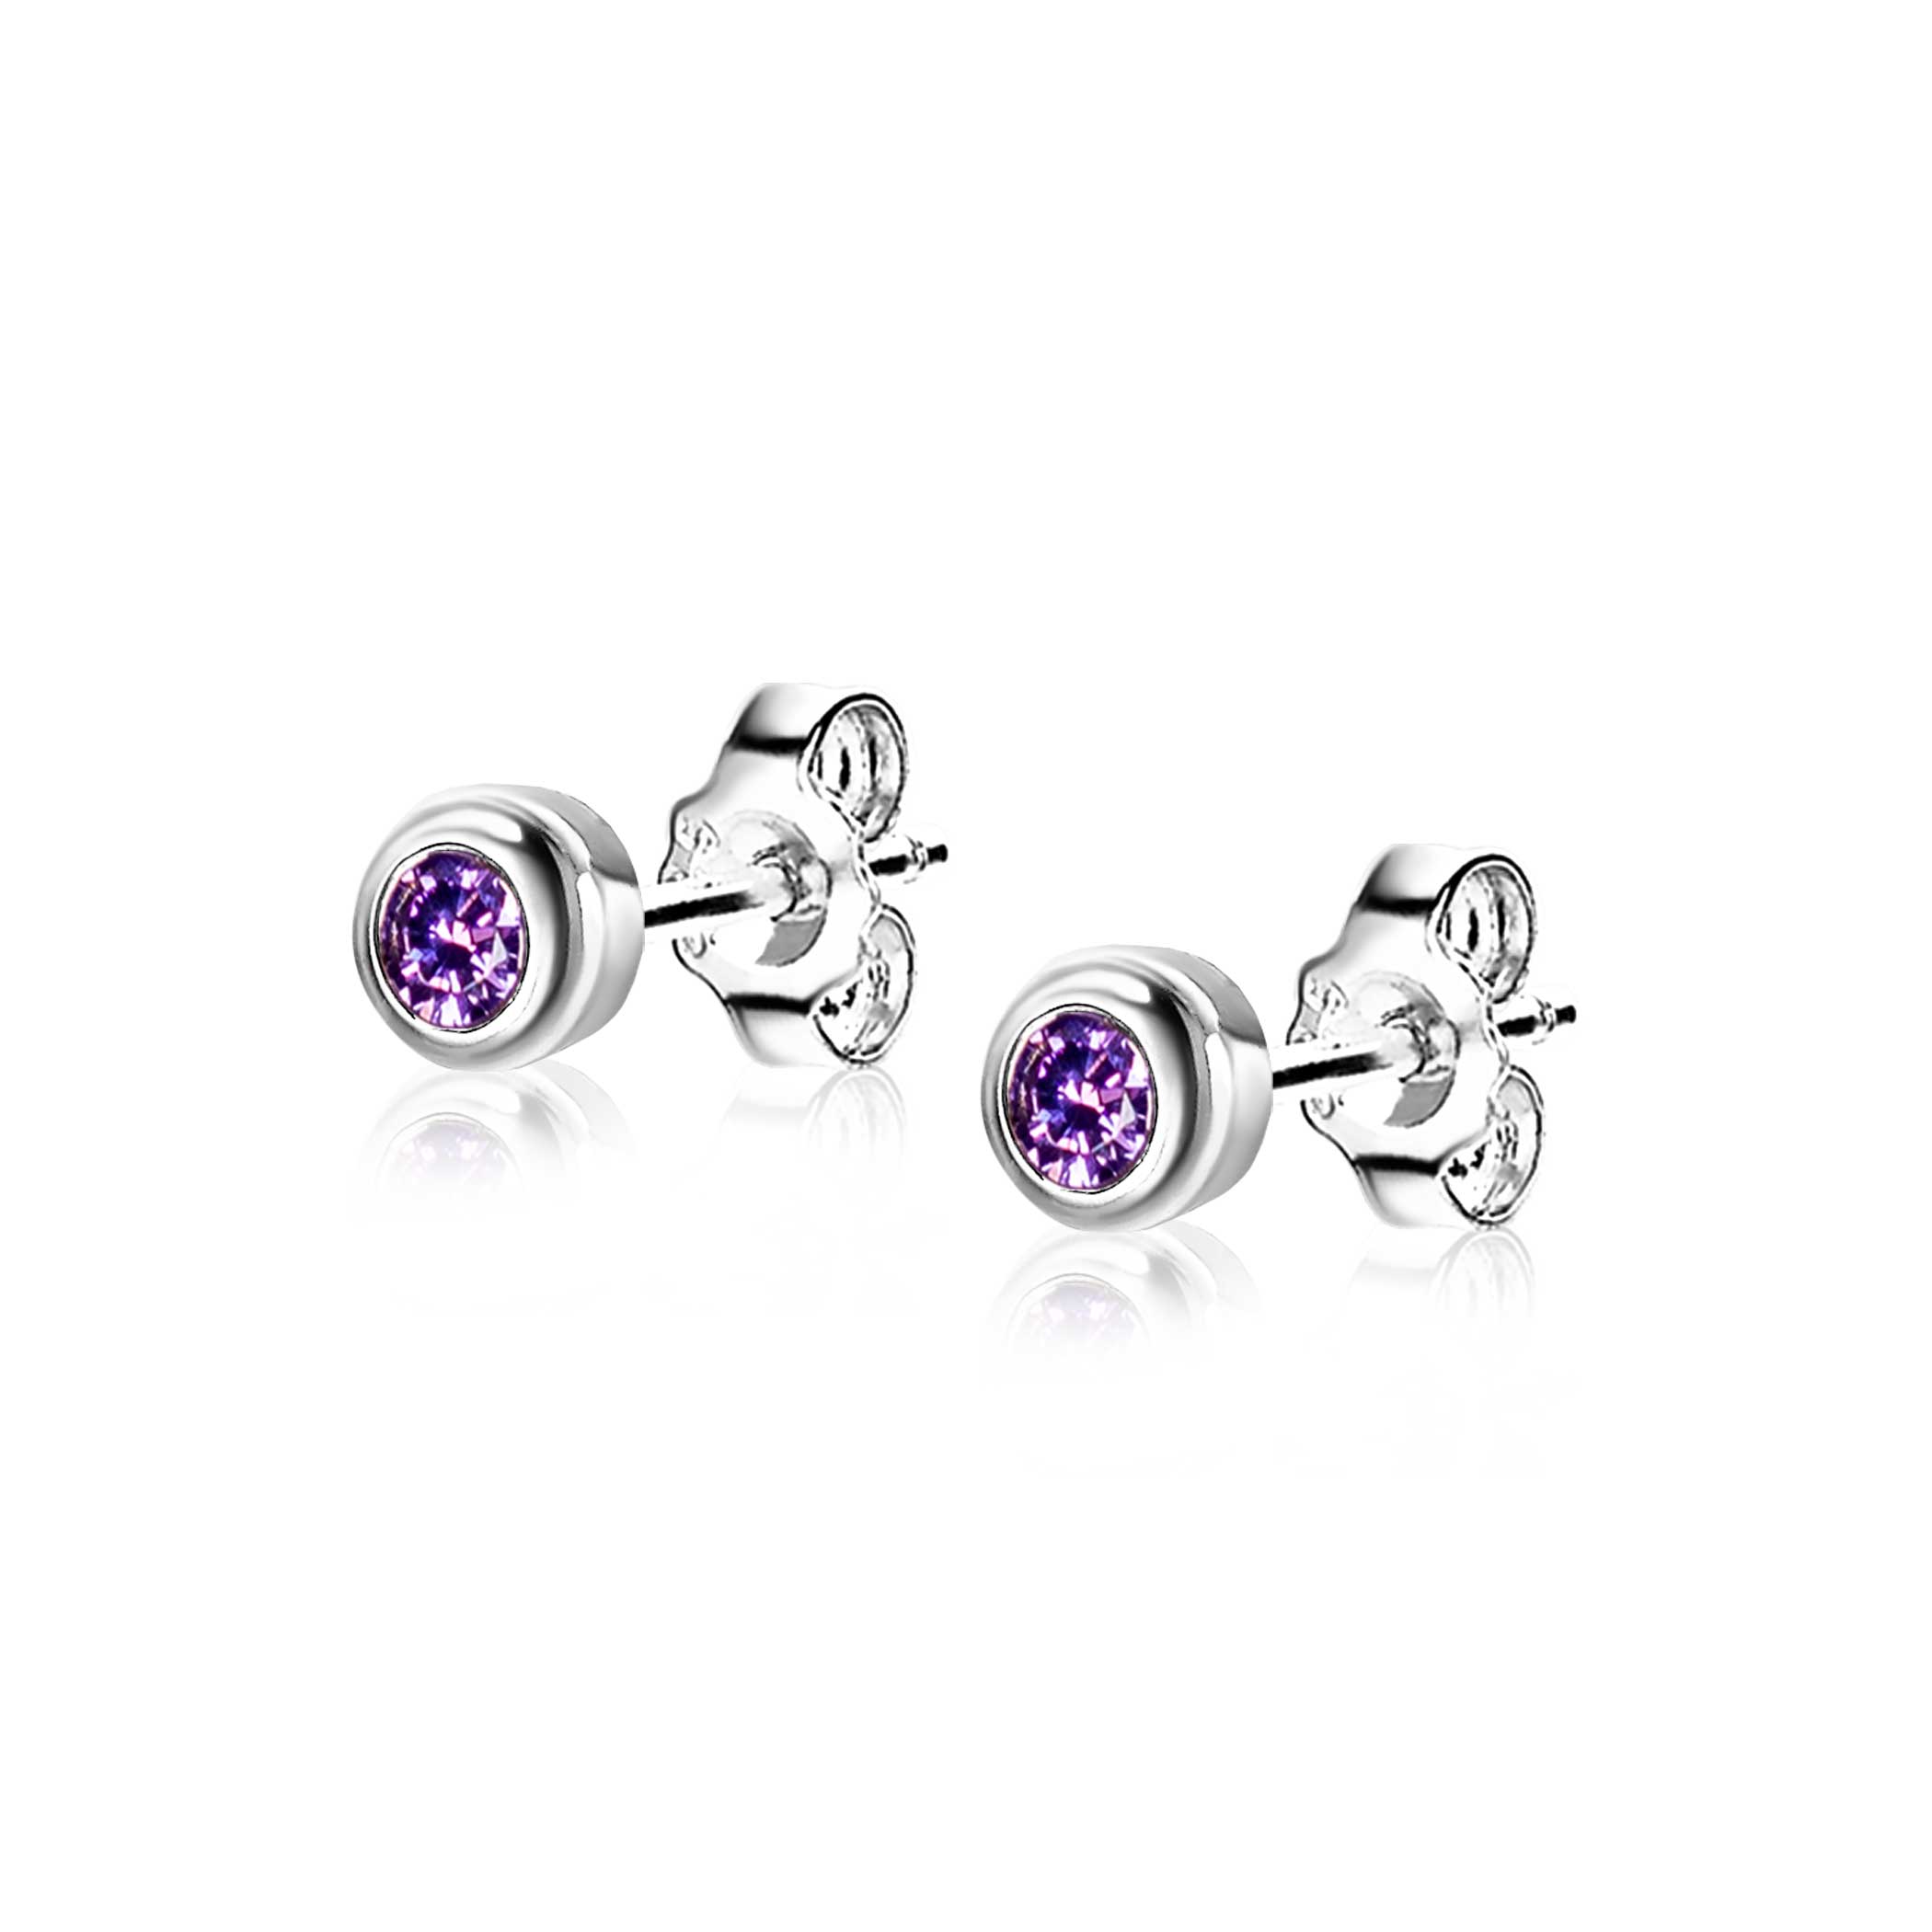 FEBRUARY Stud Earrings 4mm Sterling Silver with Birthstone Purple Smethyst Zirconia